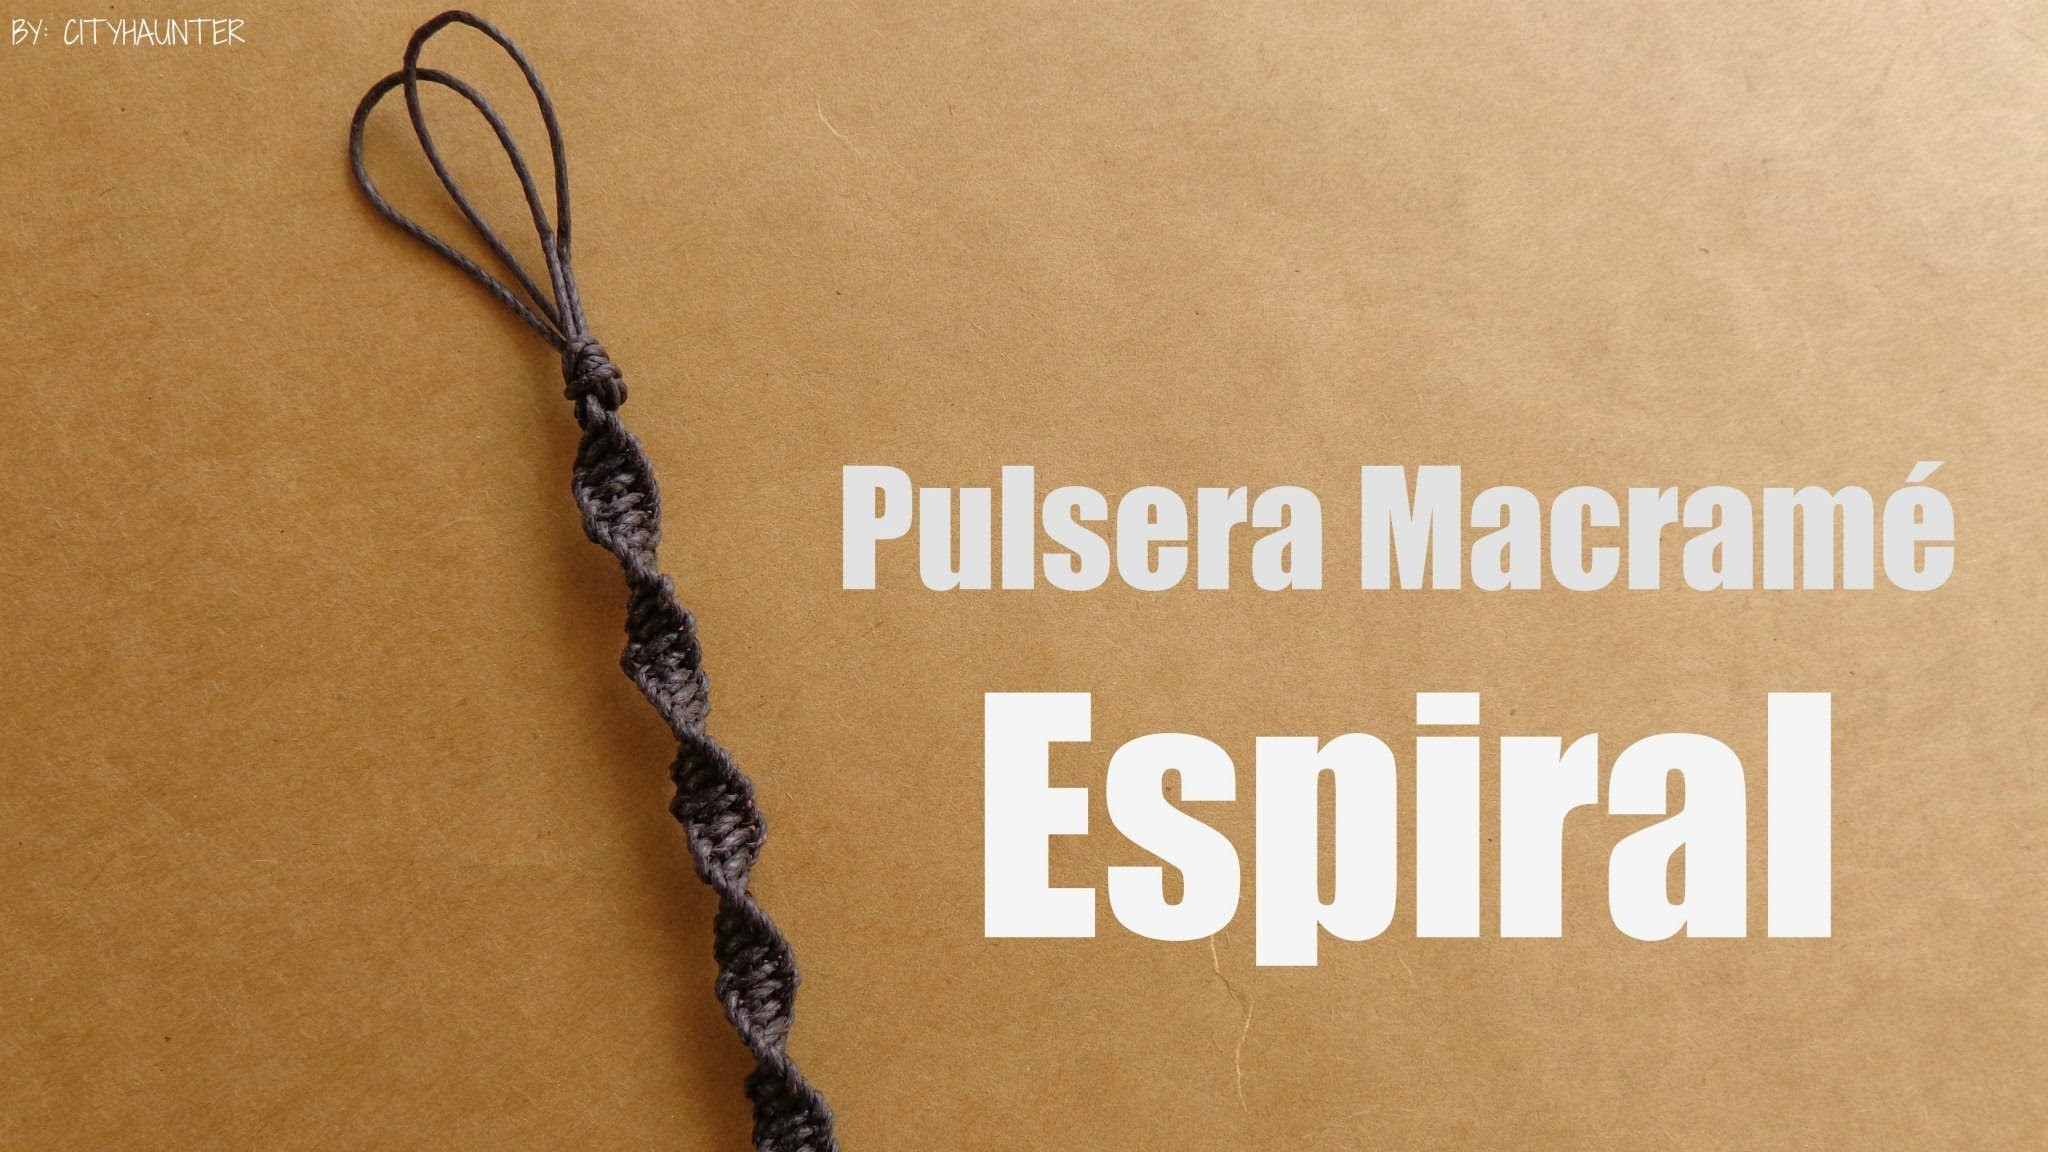 Pulsera Macrame: Espiral. Pulseras de hilo